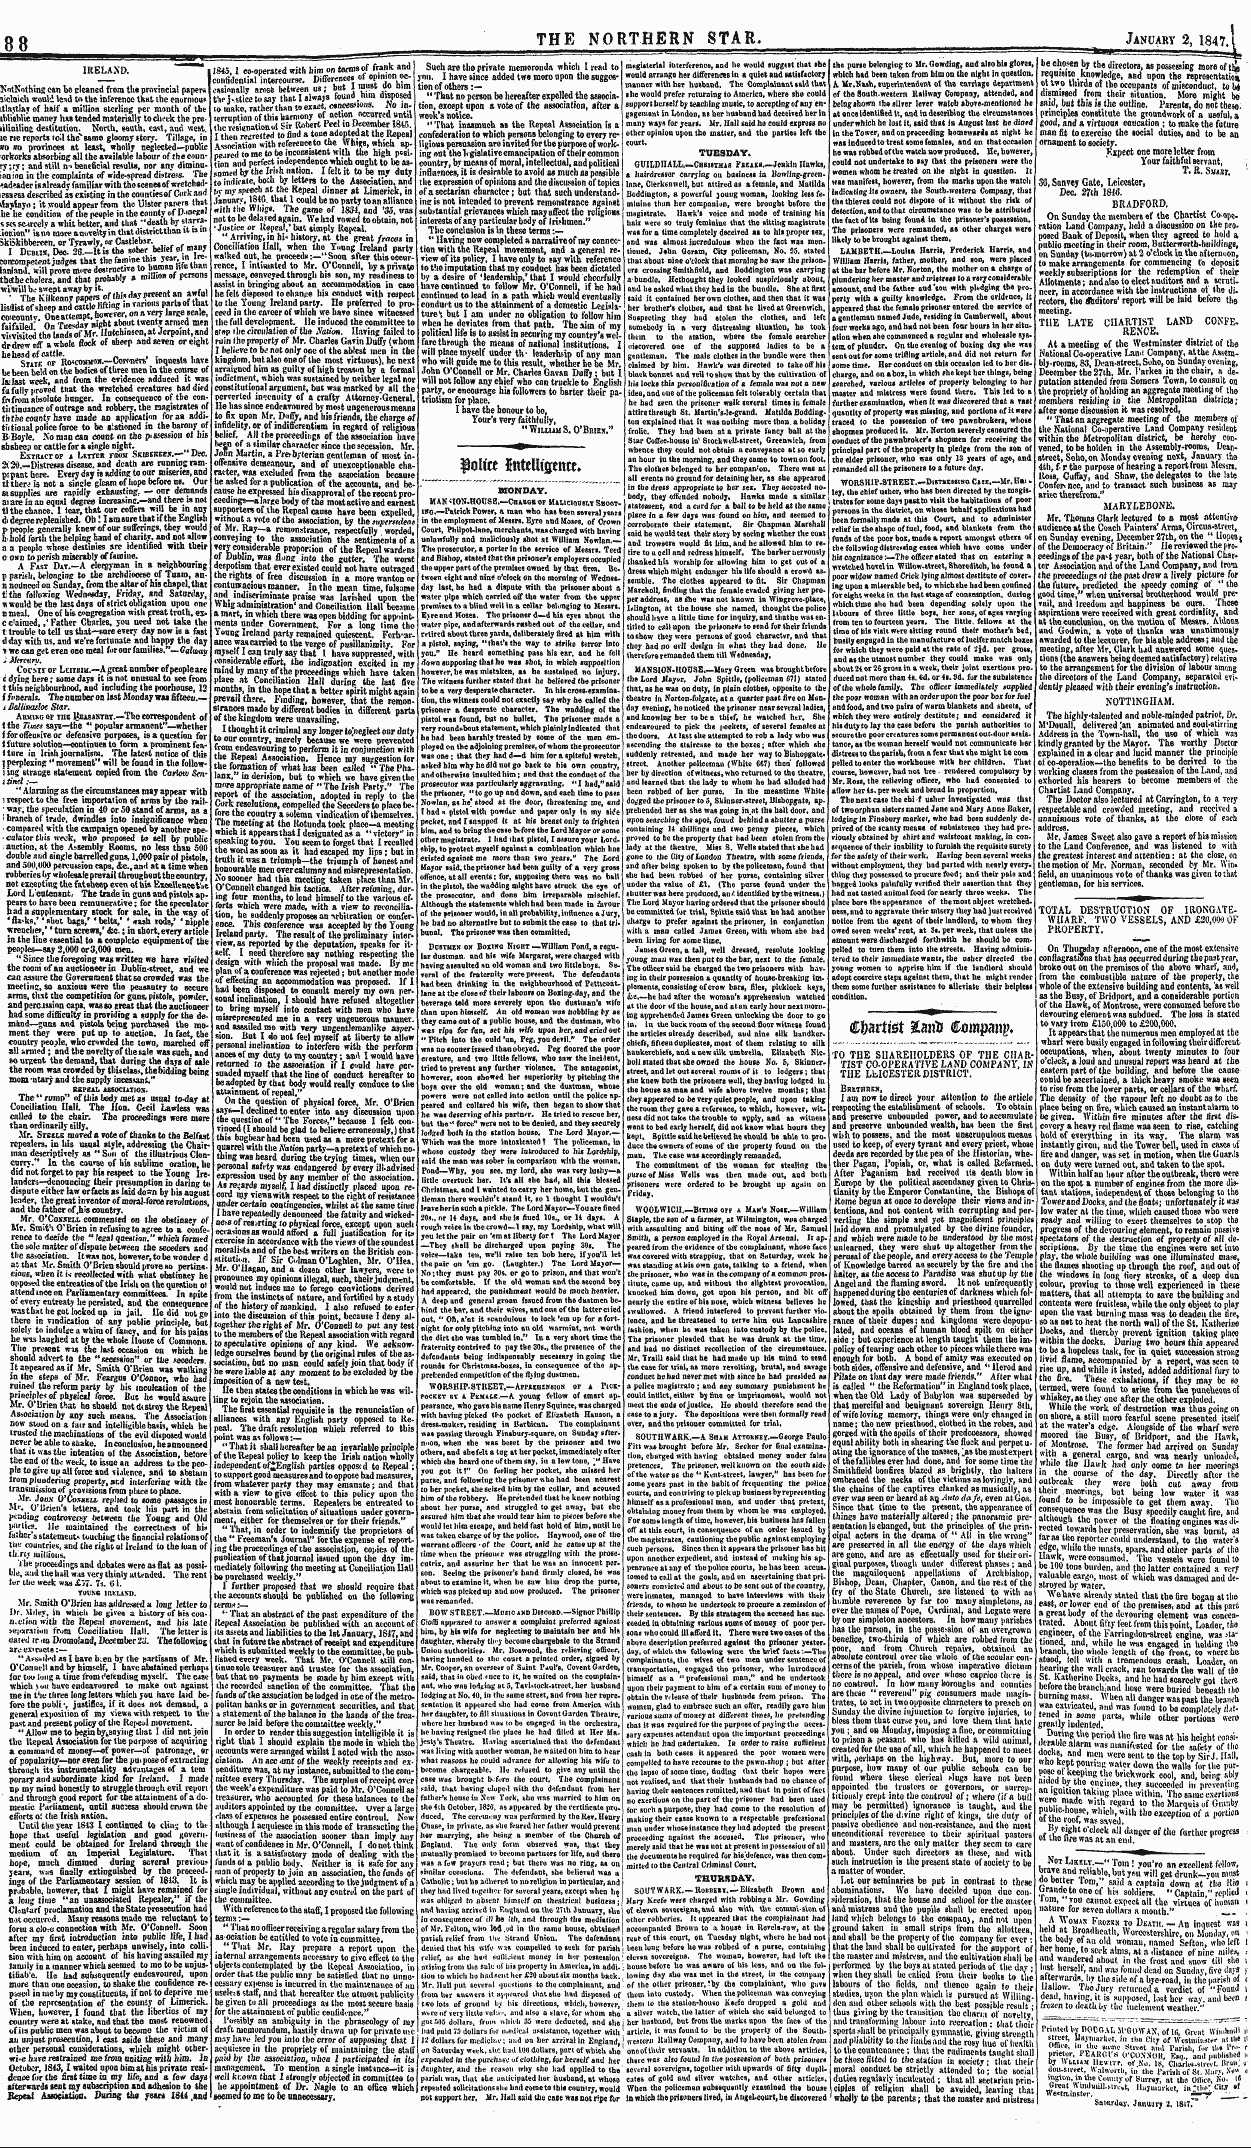 Northern Star (1837-1852): jS F Y, 2nd edition - W. U ? Zh 7- -T, " Iom! Y°U'Ro A " Excel...